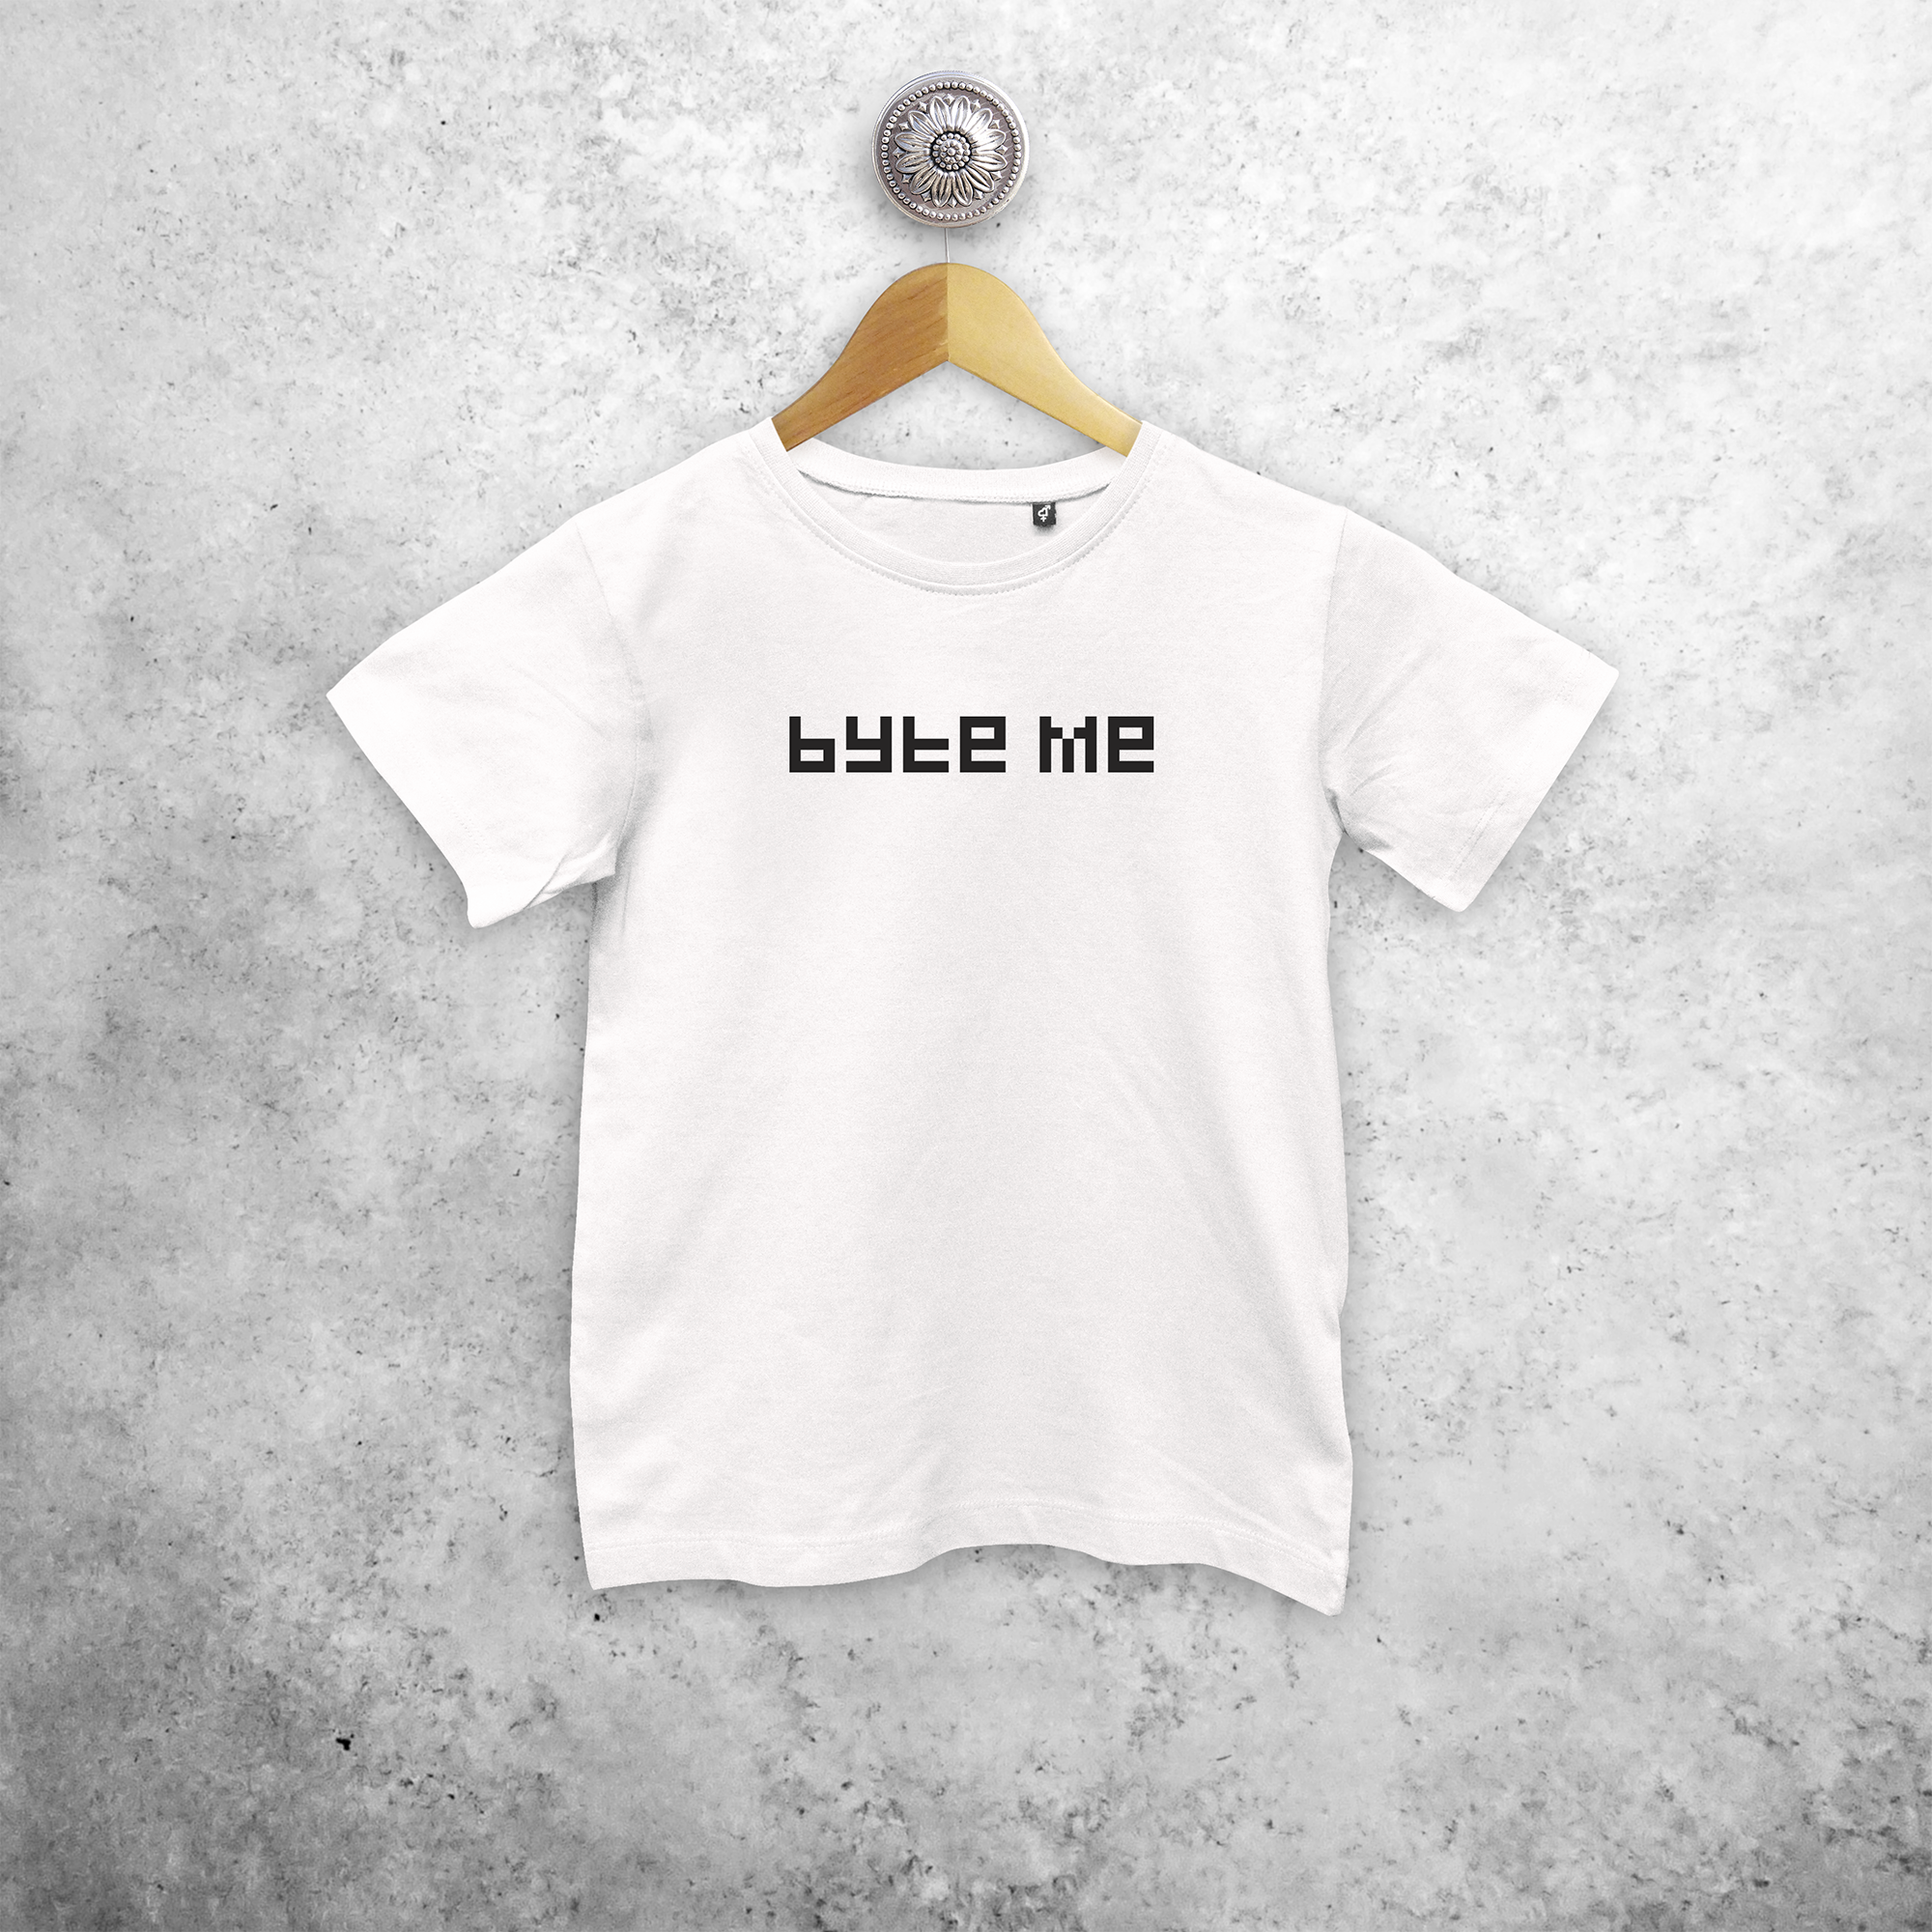 'Byte me' kids shortsleeve shirt